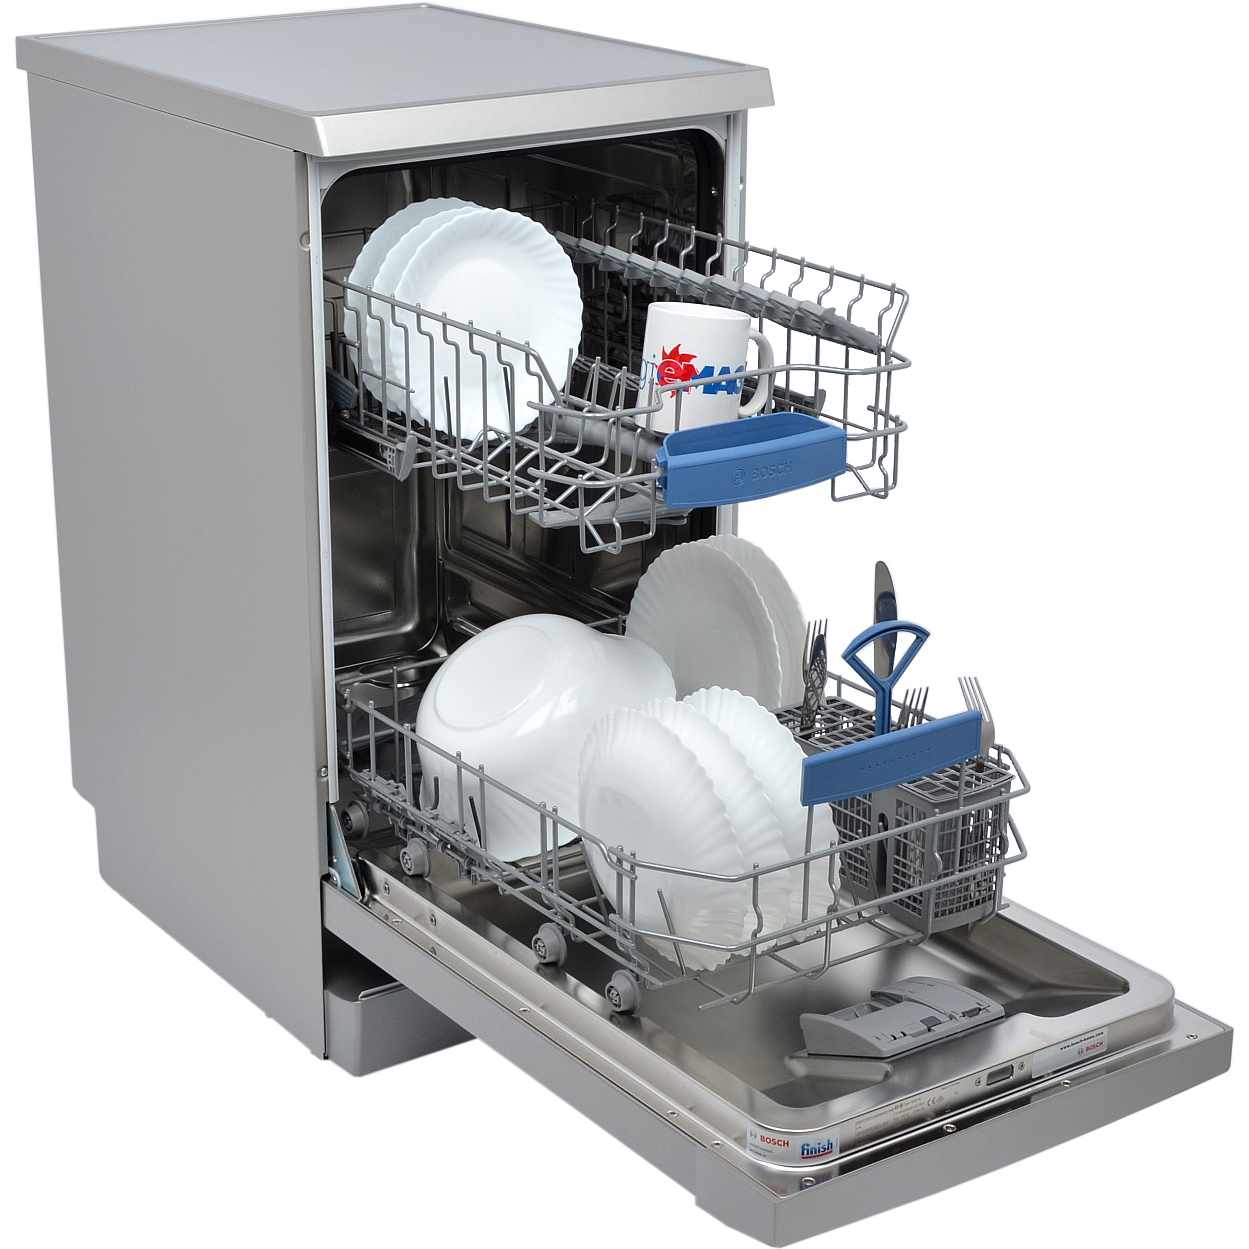 Посудомоечные машинки видео. Посудомоечная машина Bosch sps2ikw1br. Посудомоечная машина Neff s855hmx50r. ПММ бош sps53. Посудомоечная машина Bosch spv6hmx1mr.